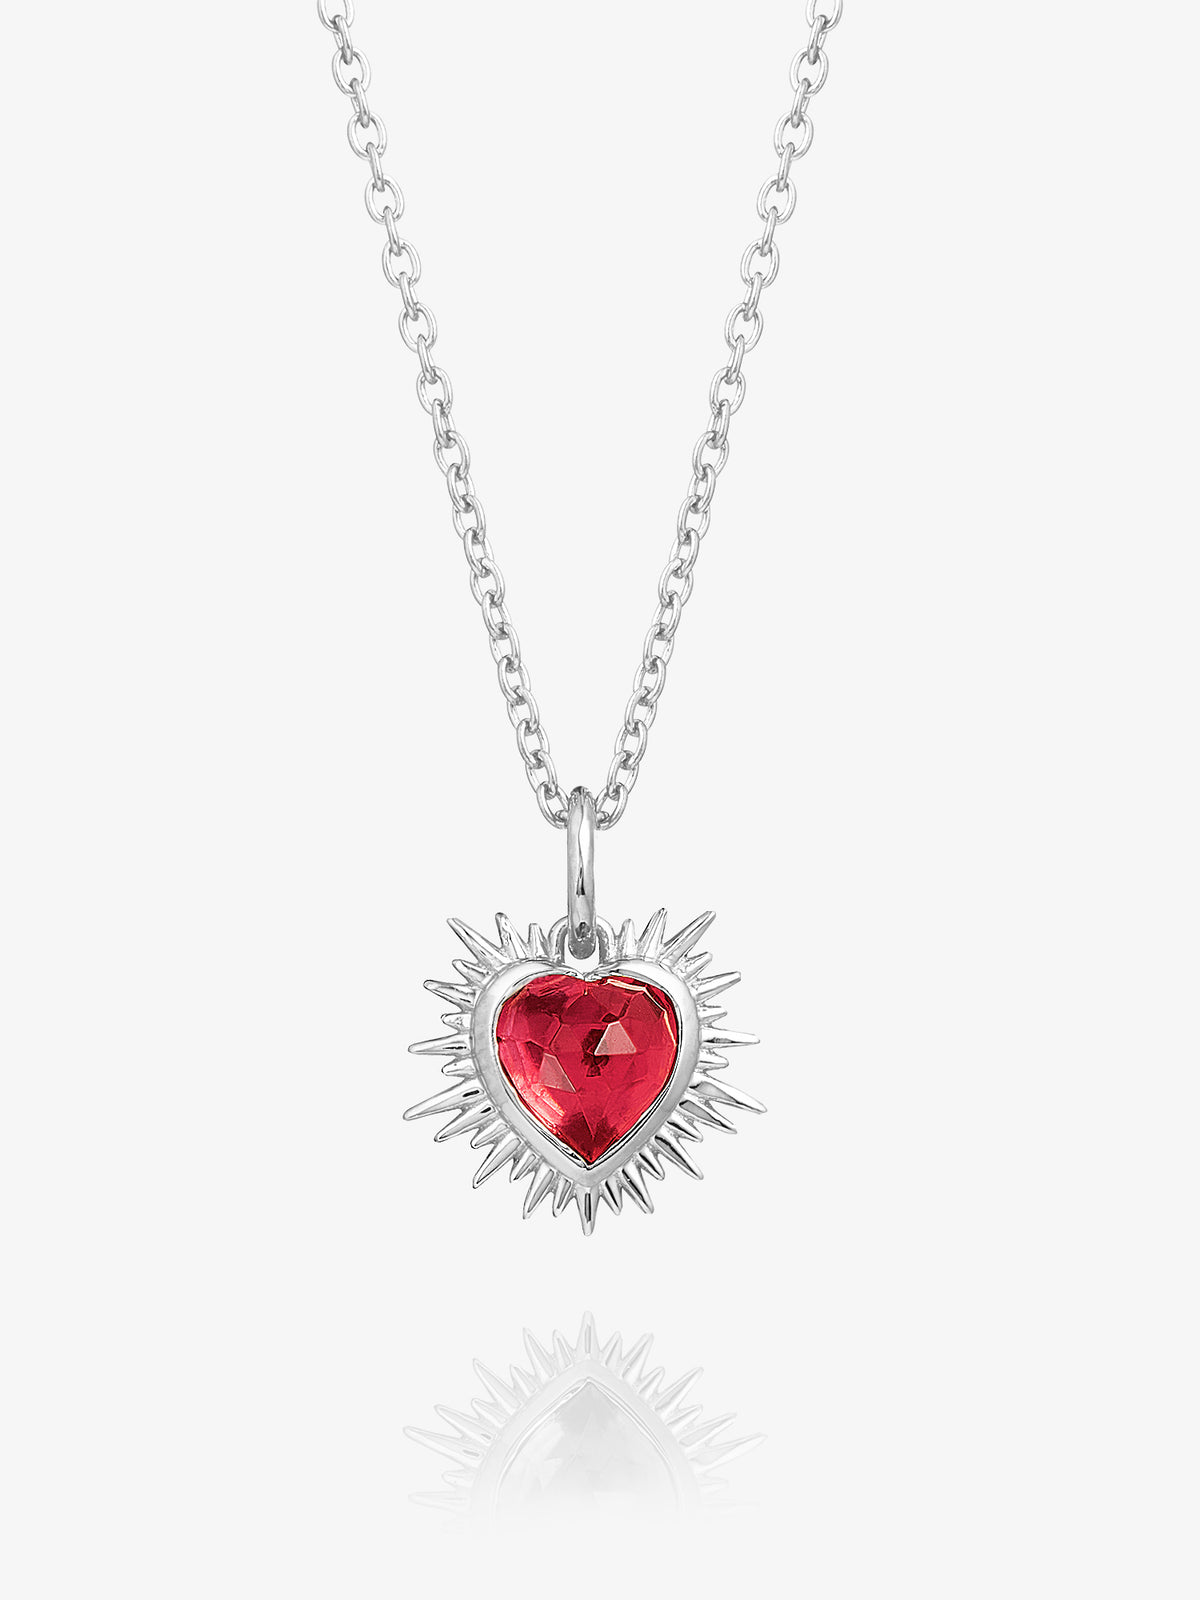 RJ x Nicola Coughlan For Choose Love Necklace